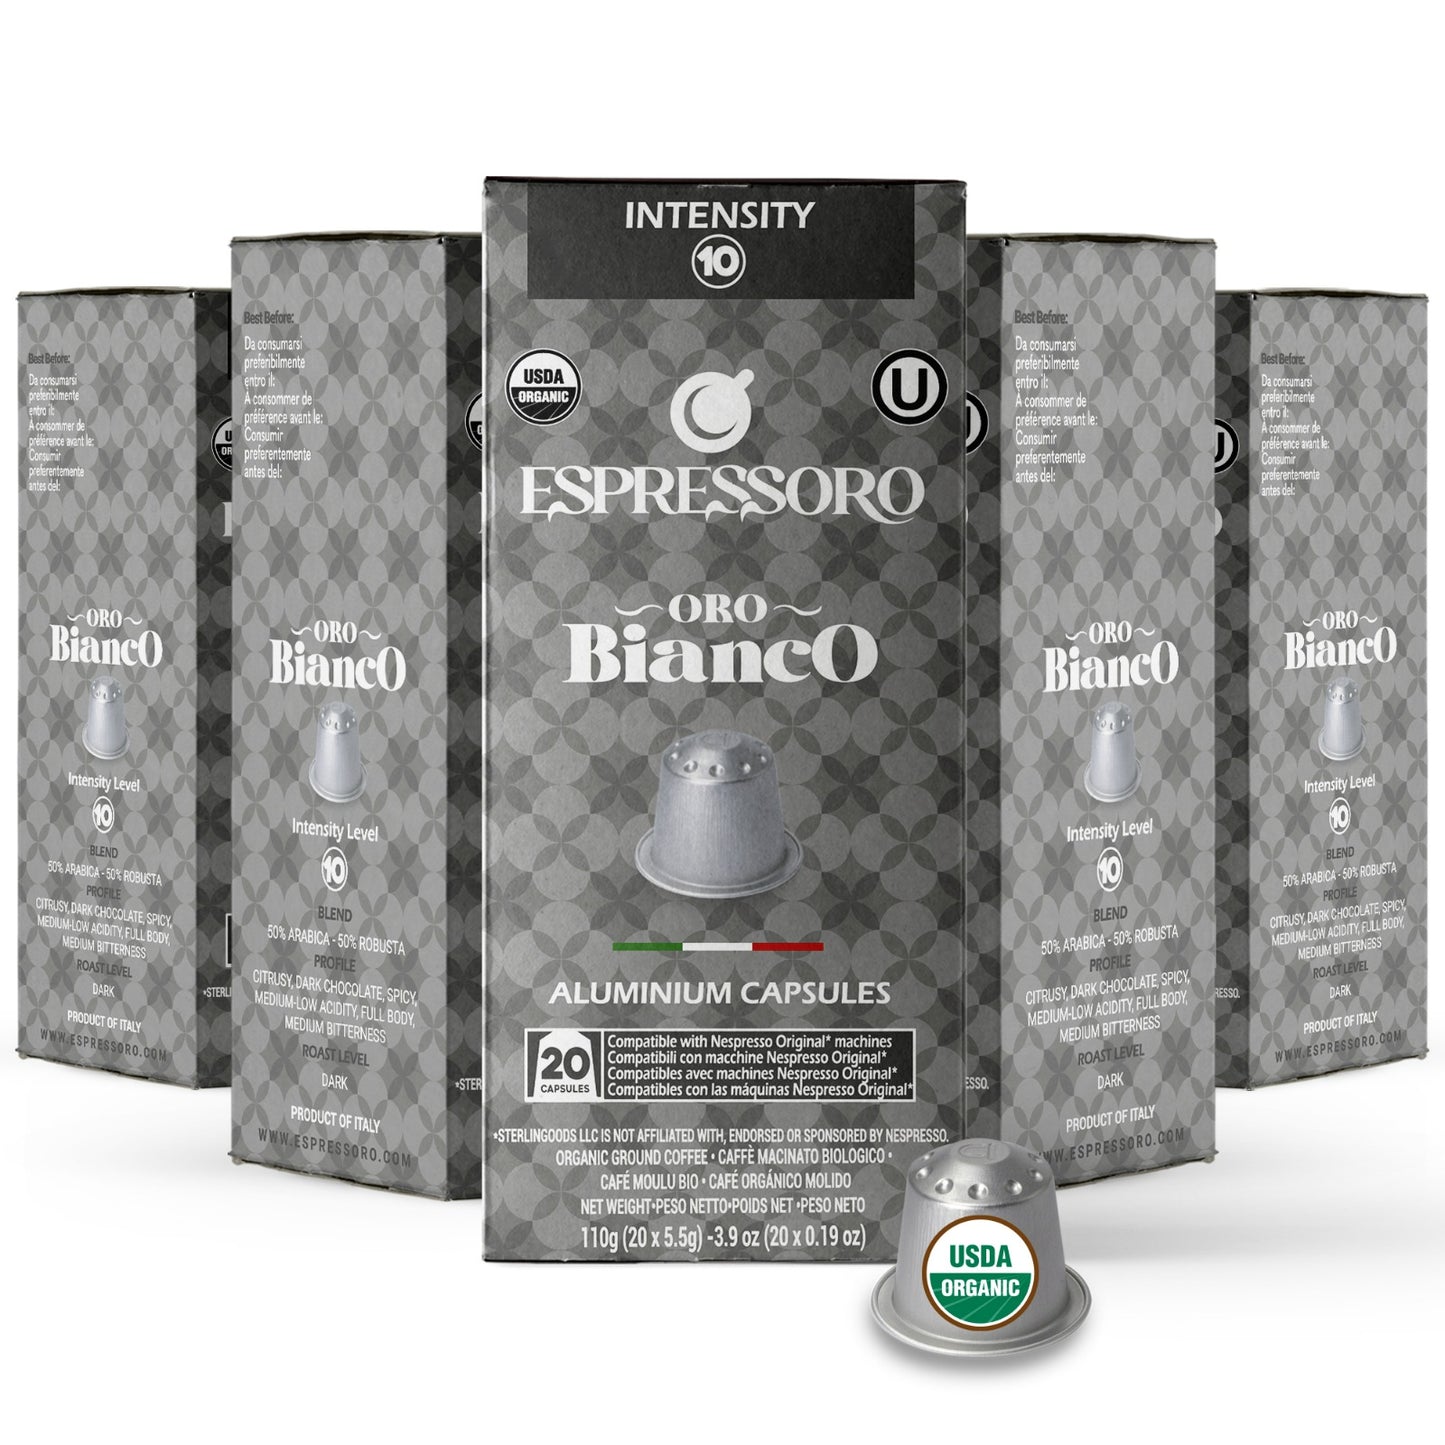 Espressoro BIANCO 100 Espresso pods, Nespresso Compatible Aluminum Espresso Pods, Intensity 10, Generic Nespresso Pods